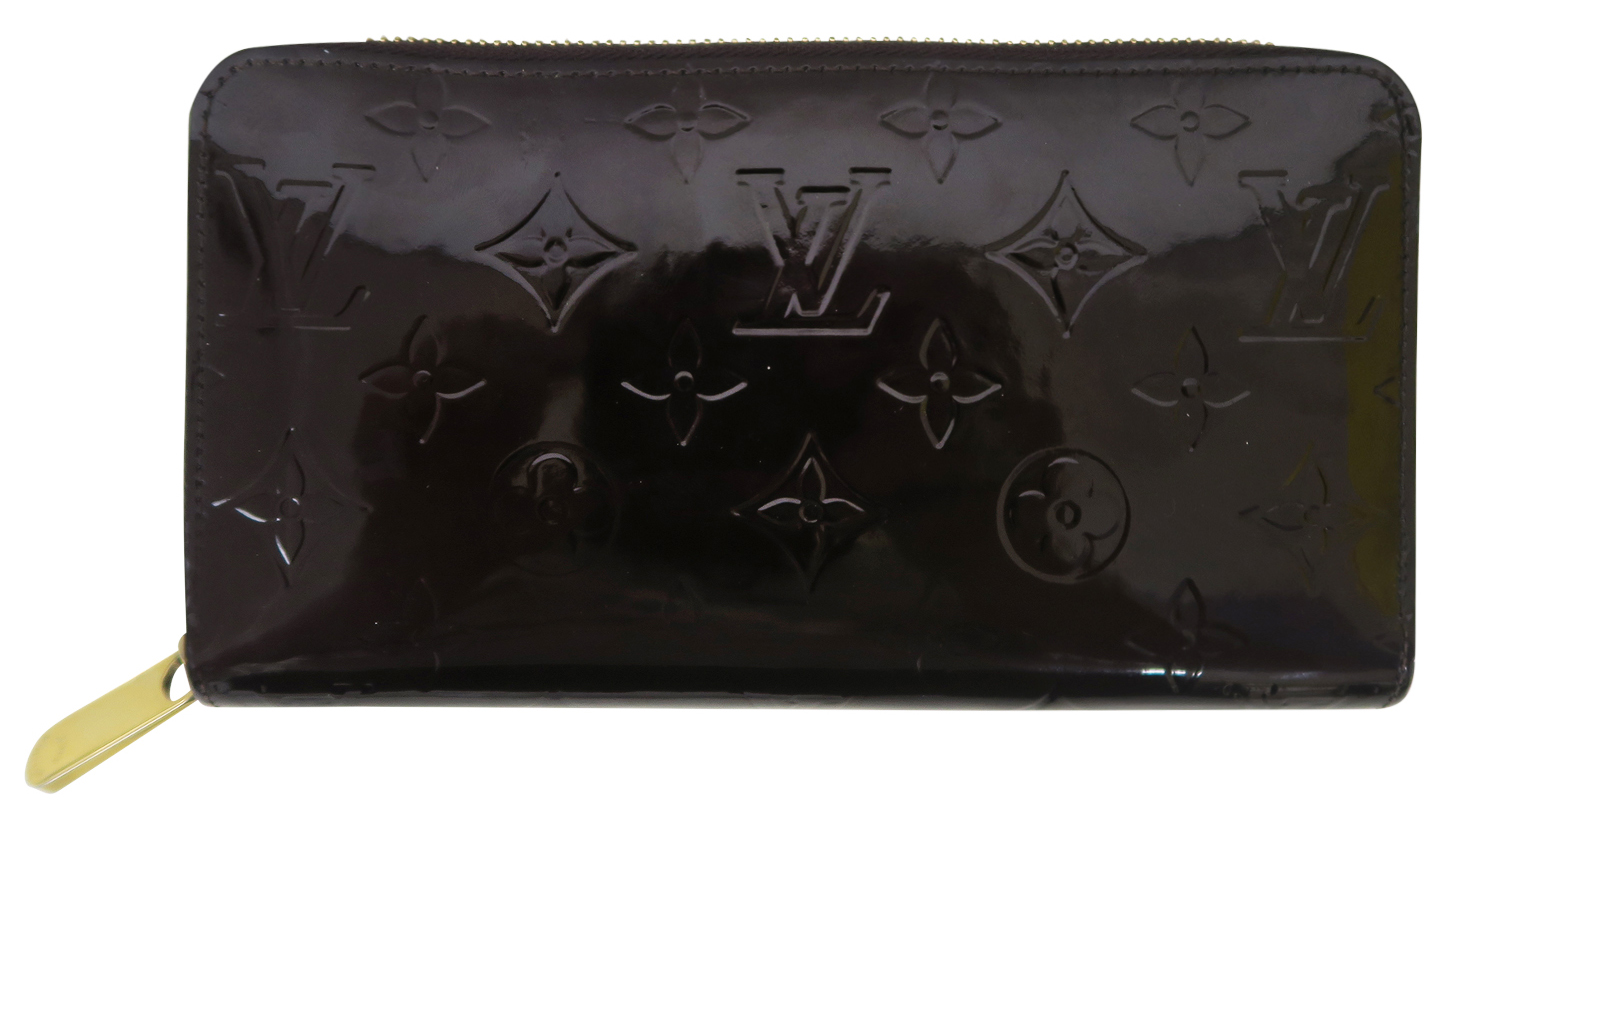 Louis Vuitton Vernis Zippy Wallet Amarante